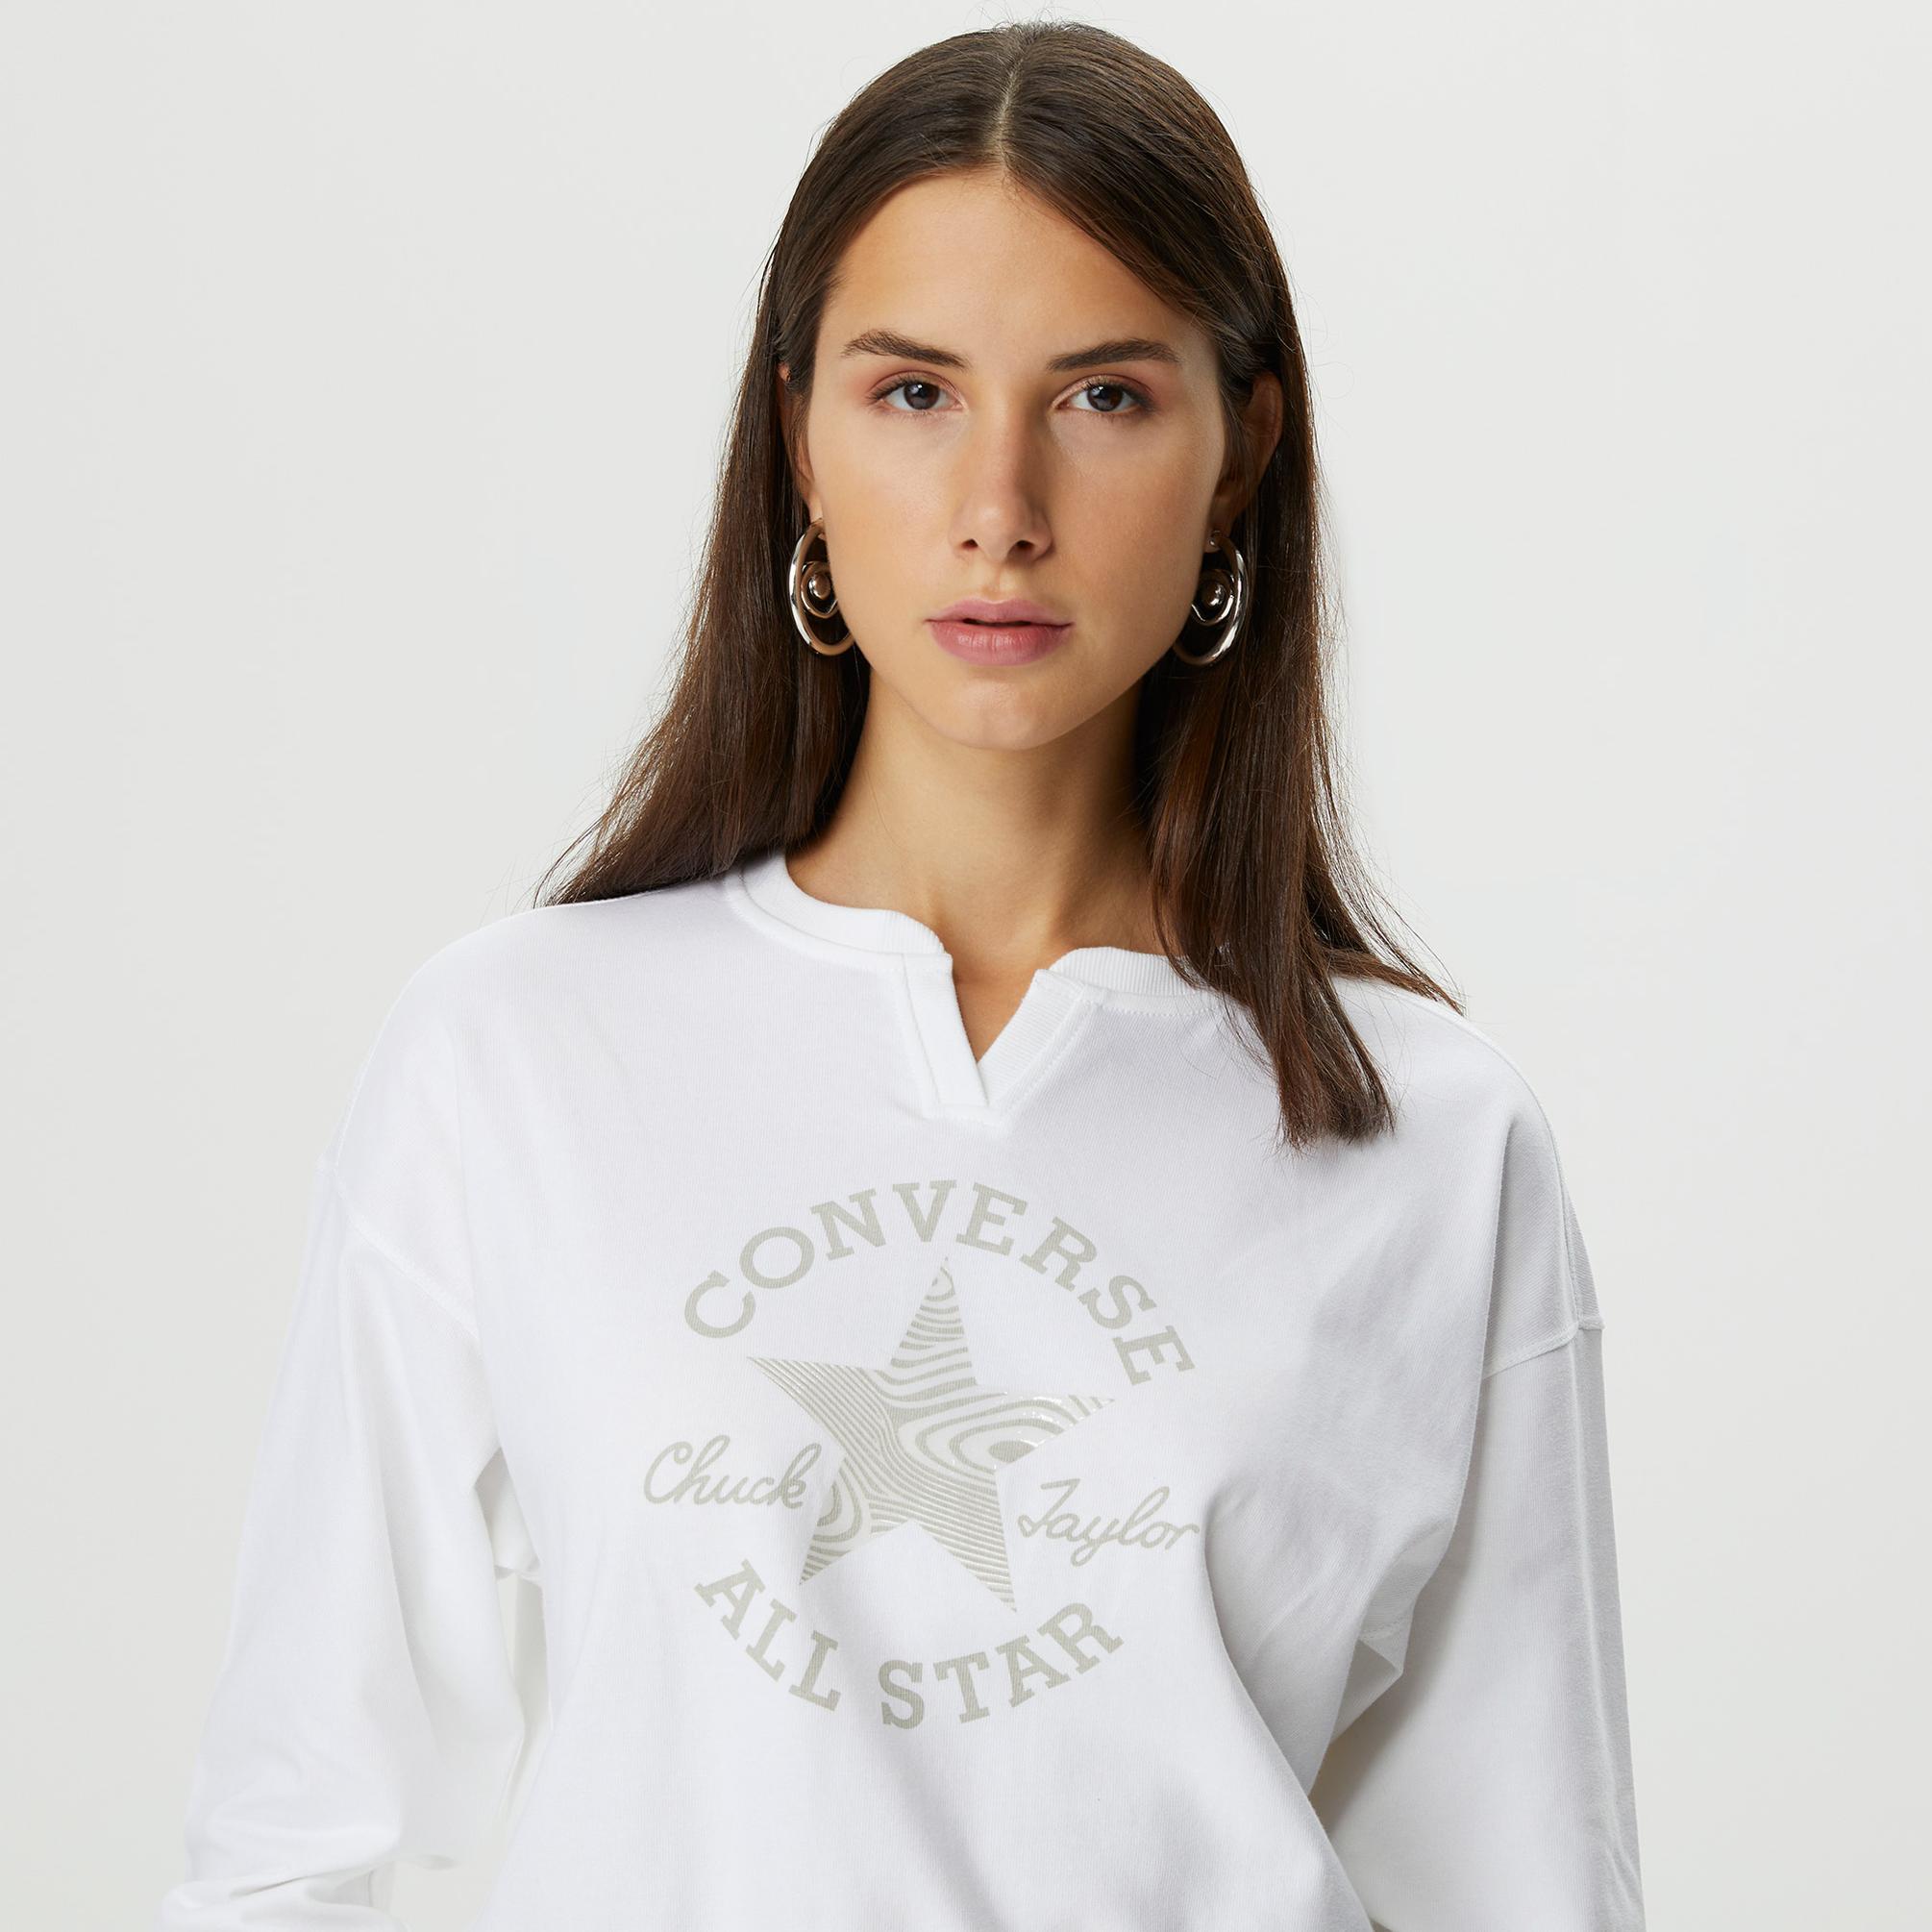  Converse Chuck Taylor Patch Crew Kadın Beyaz Sweatshirt